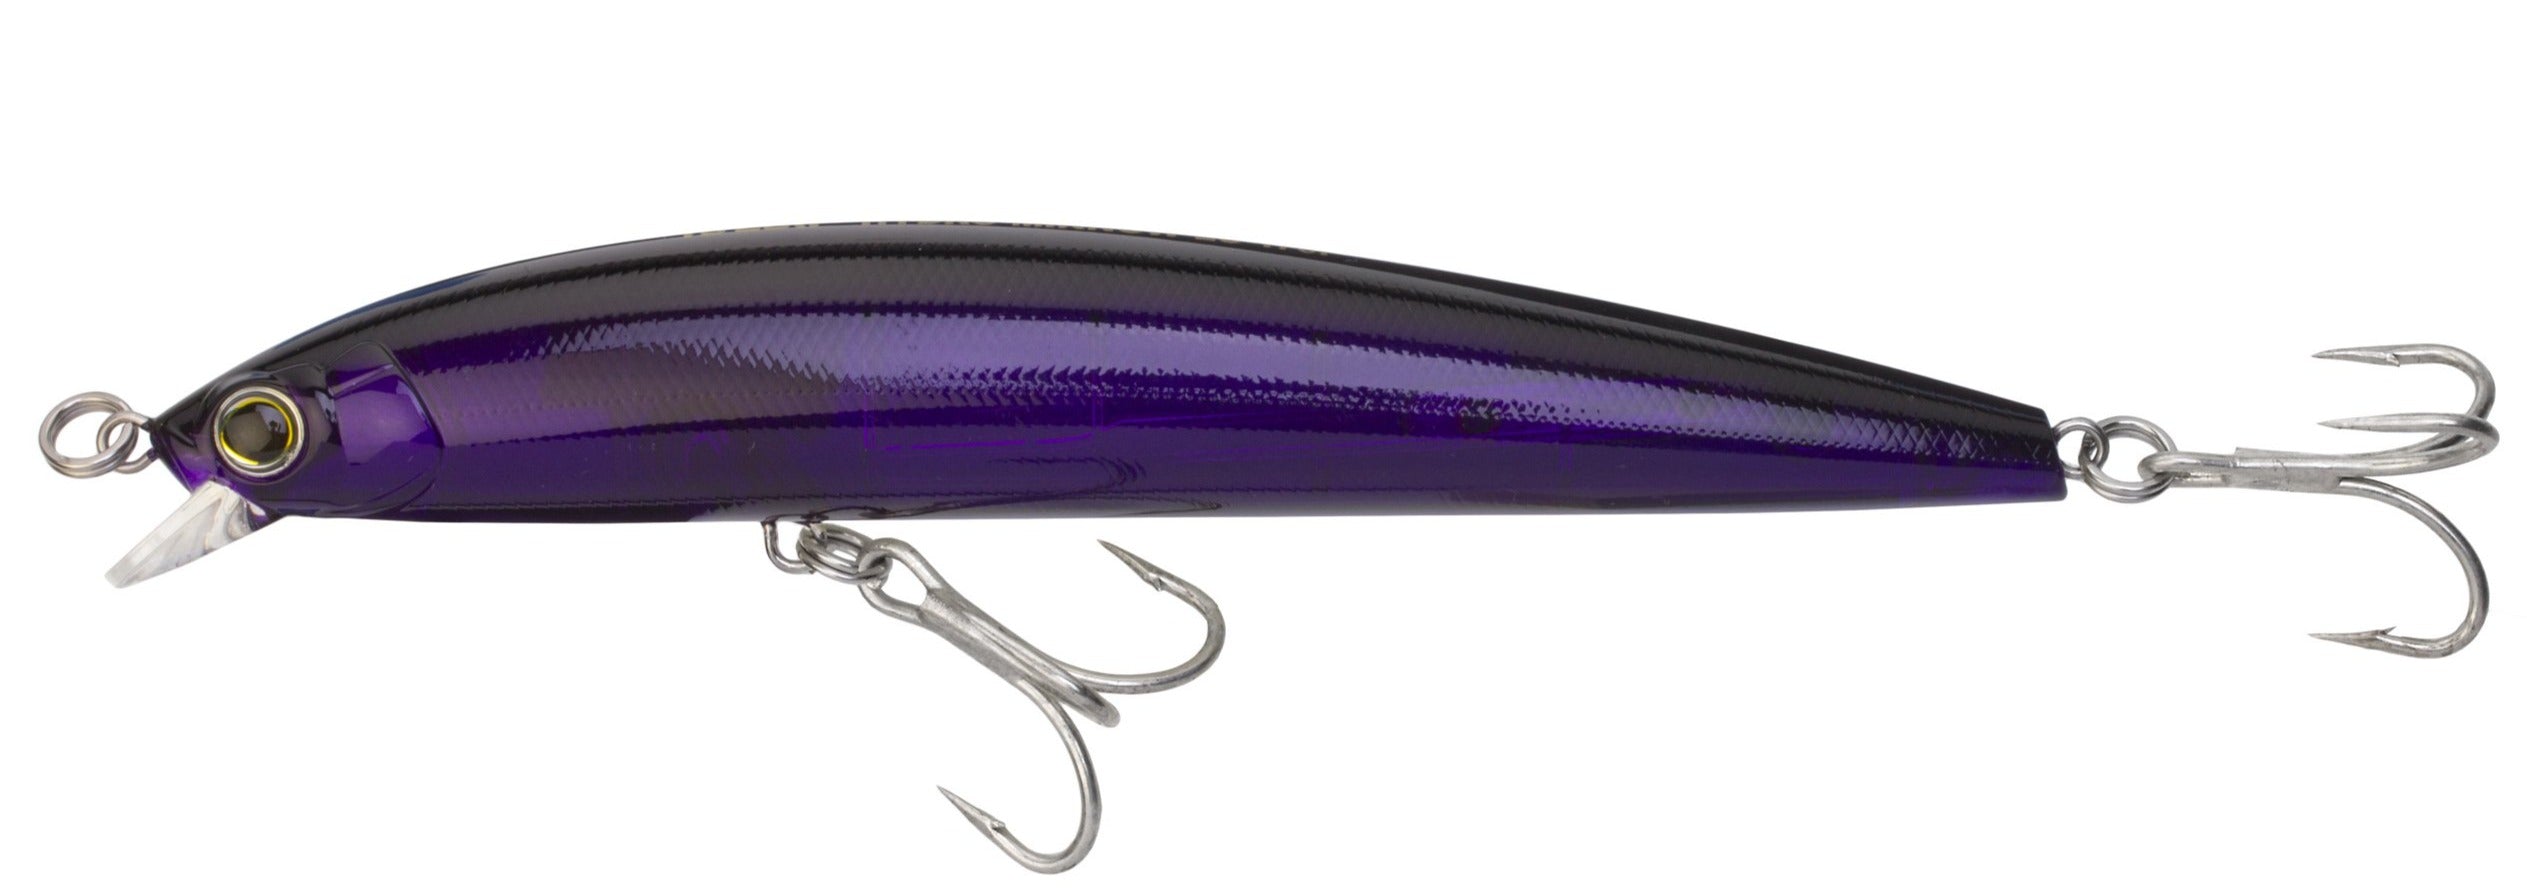 Yo-Zuri Hydro Minnow LC Black/Purple